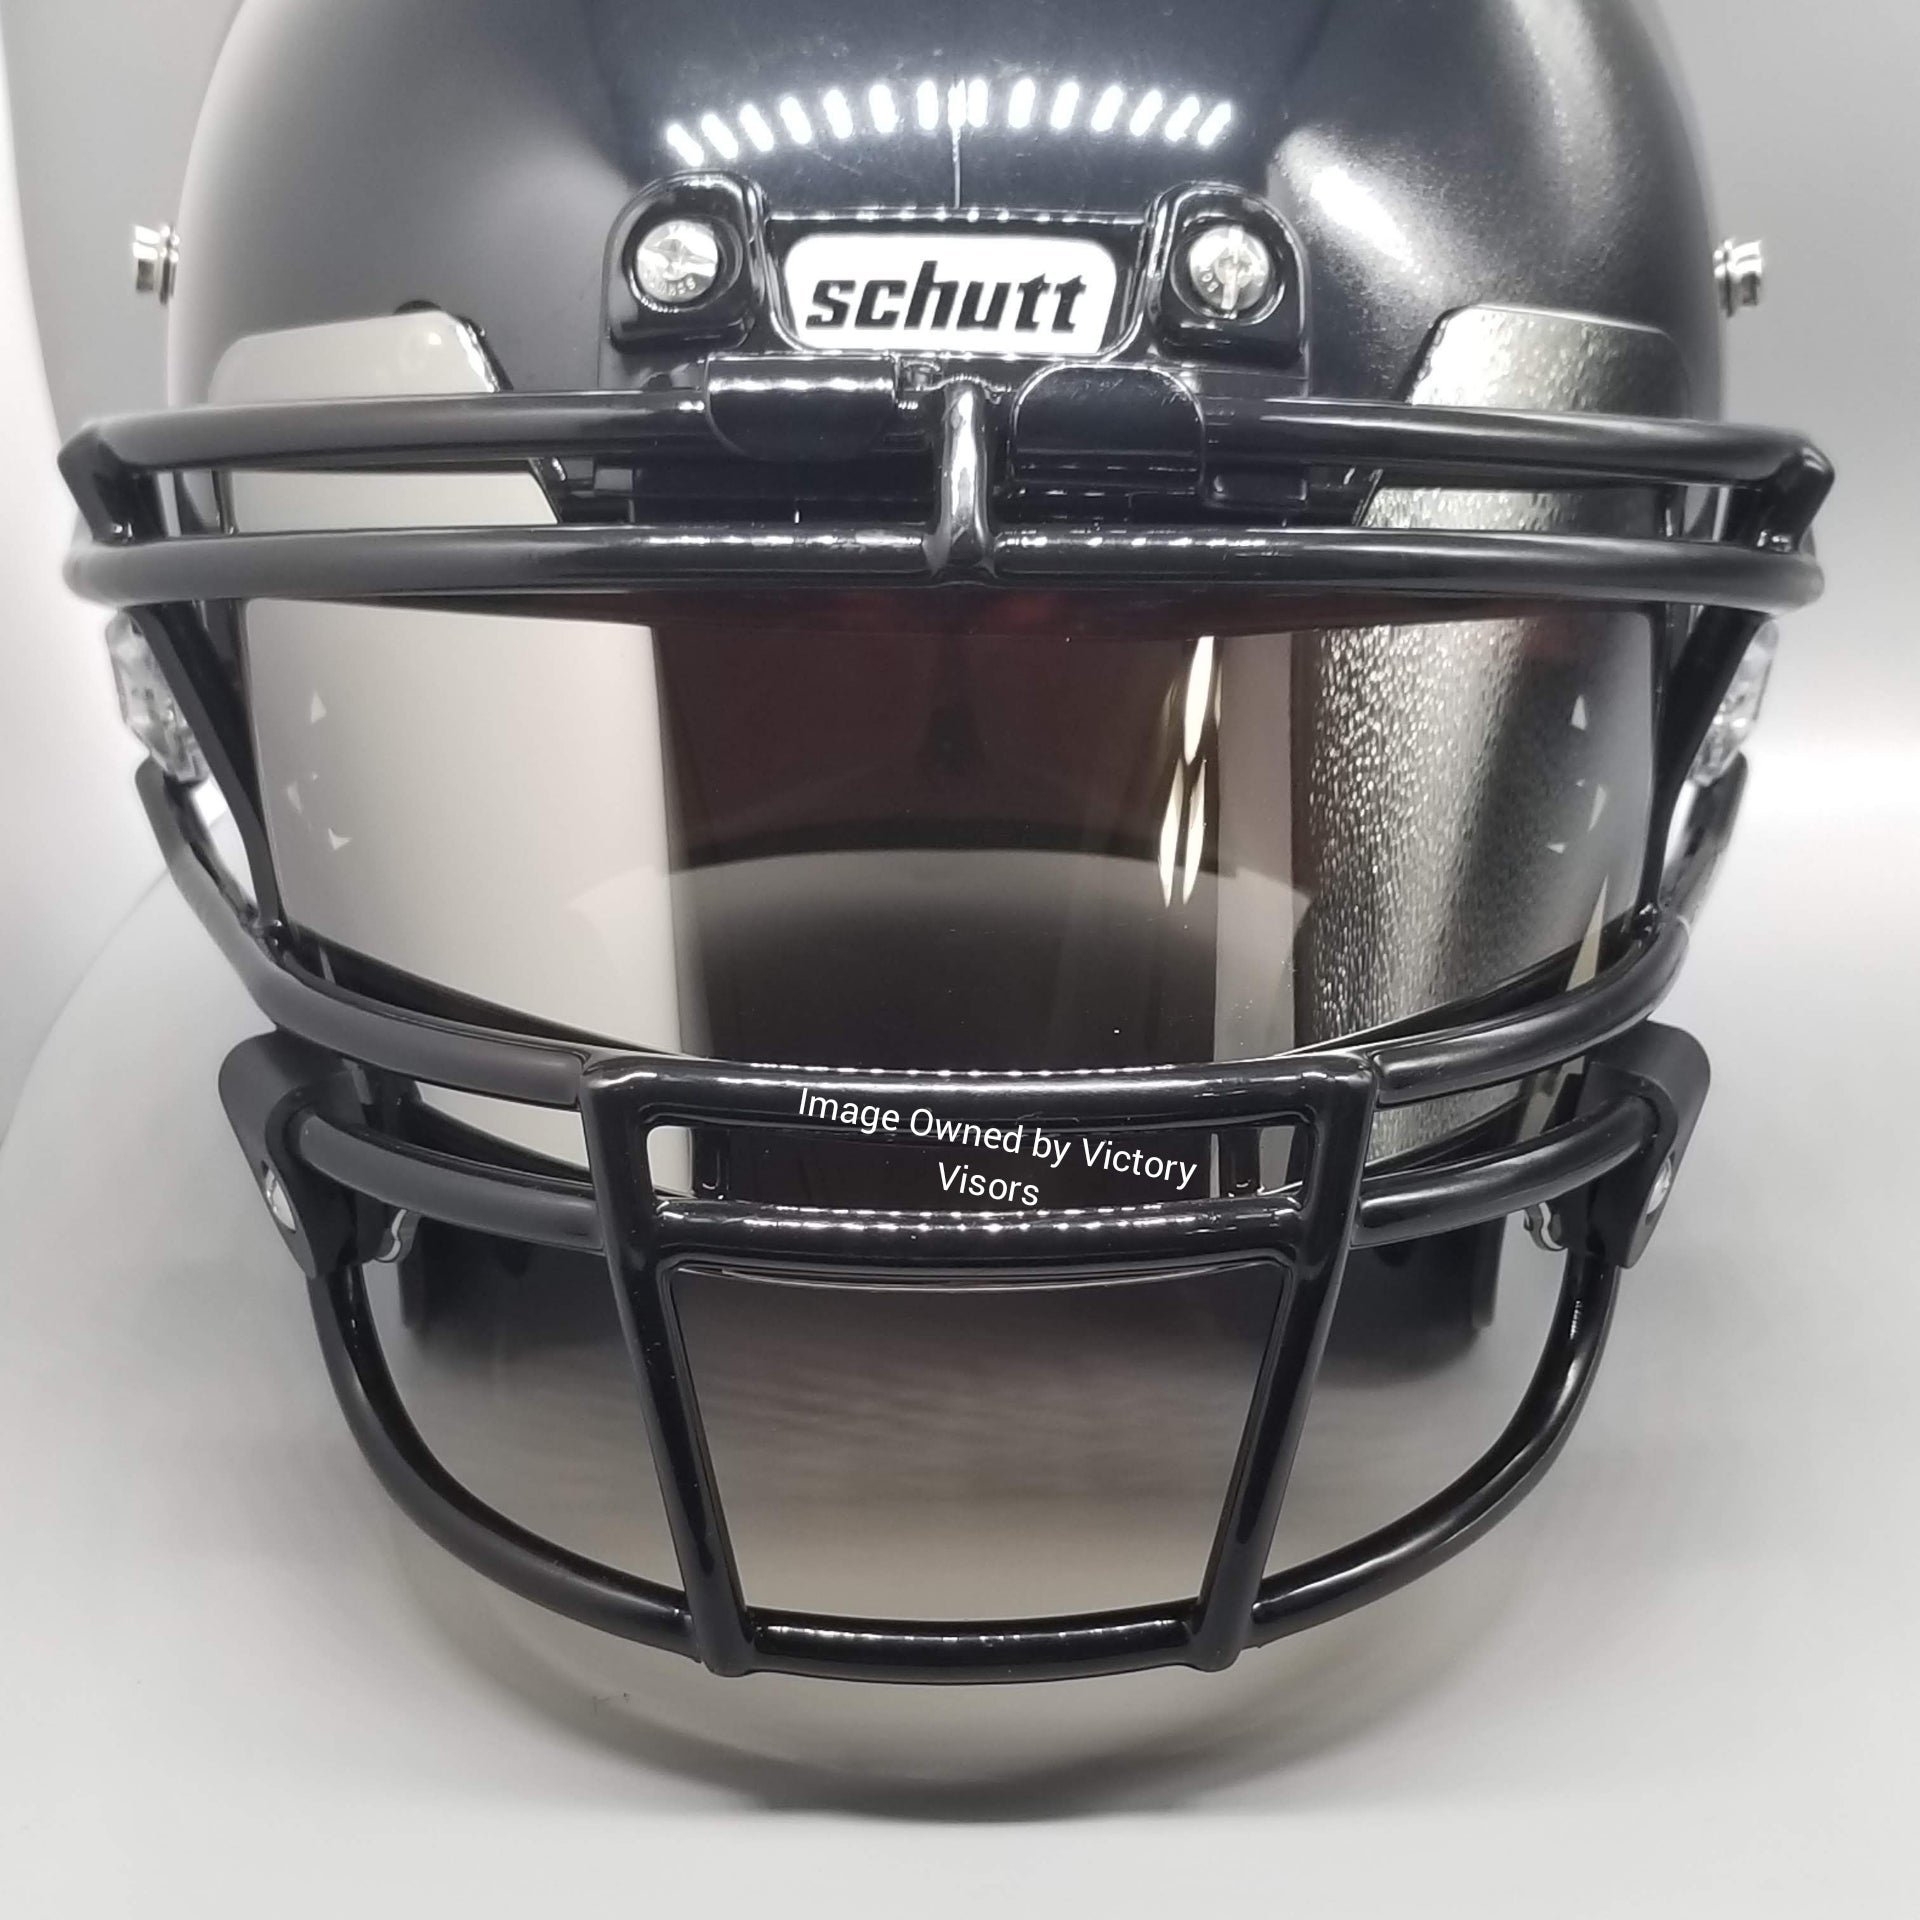  MENOLY Football Visor, Youth Football Helmet Viosor, Scratch  Resistant, UV Block, Facial Protection Visor for Football Helmet (Black) :  Sports & Outdoors